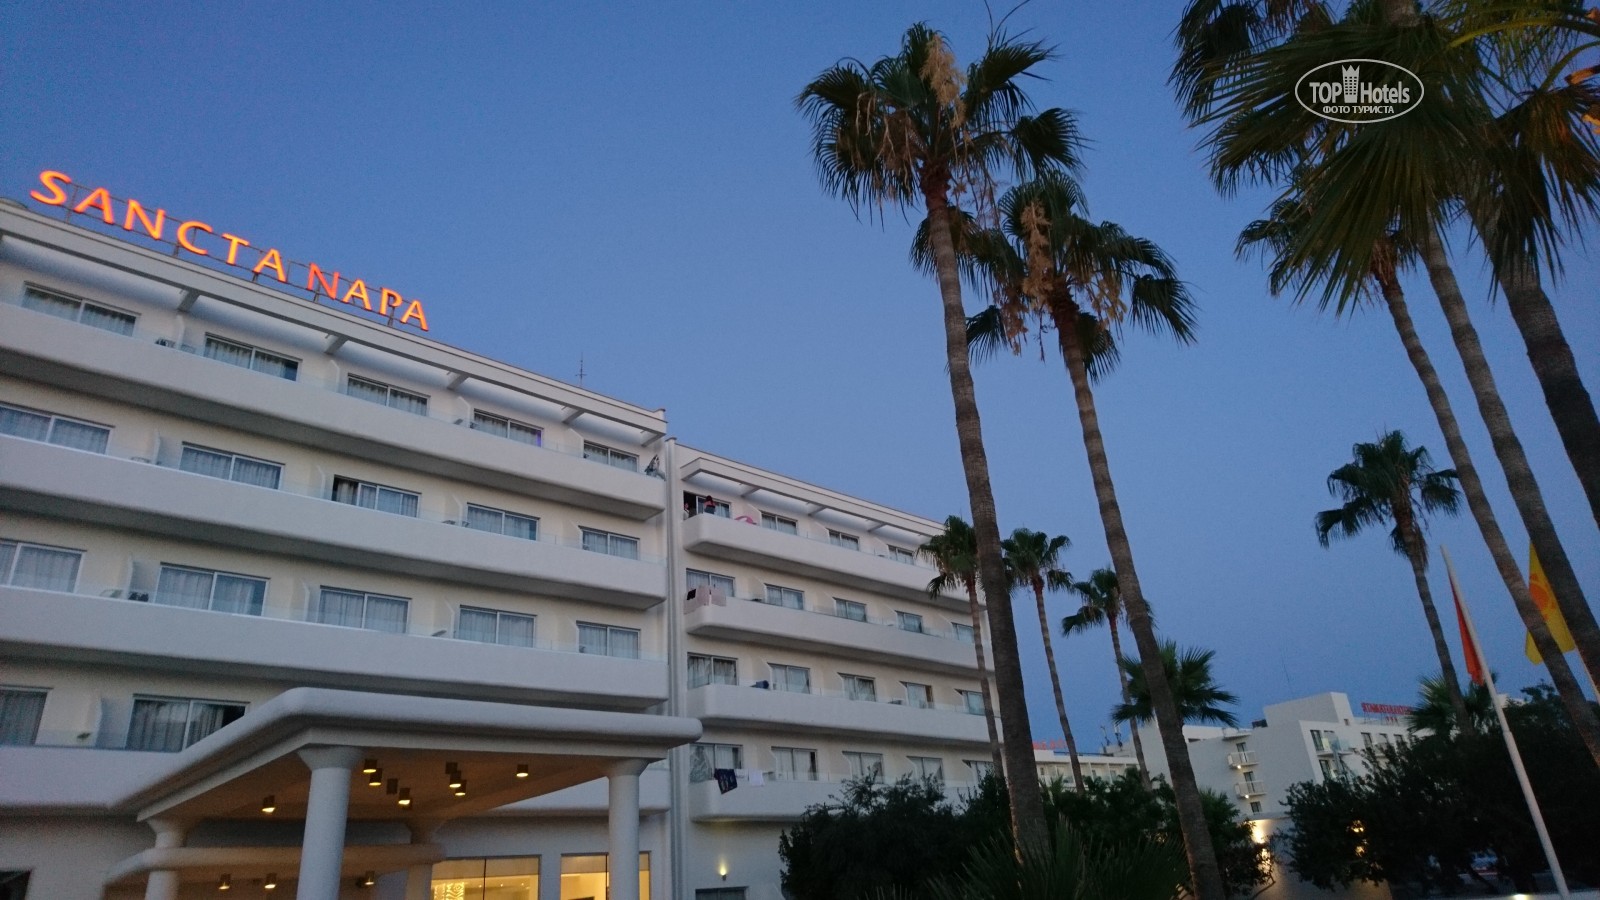 Oferty hotelowe last minute Atlantica Sancta Napa Ajia Napa